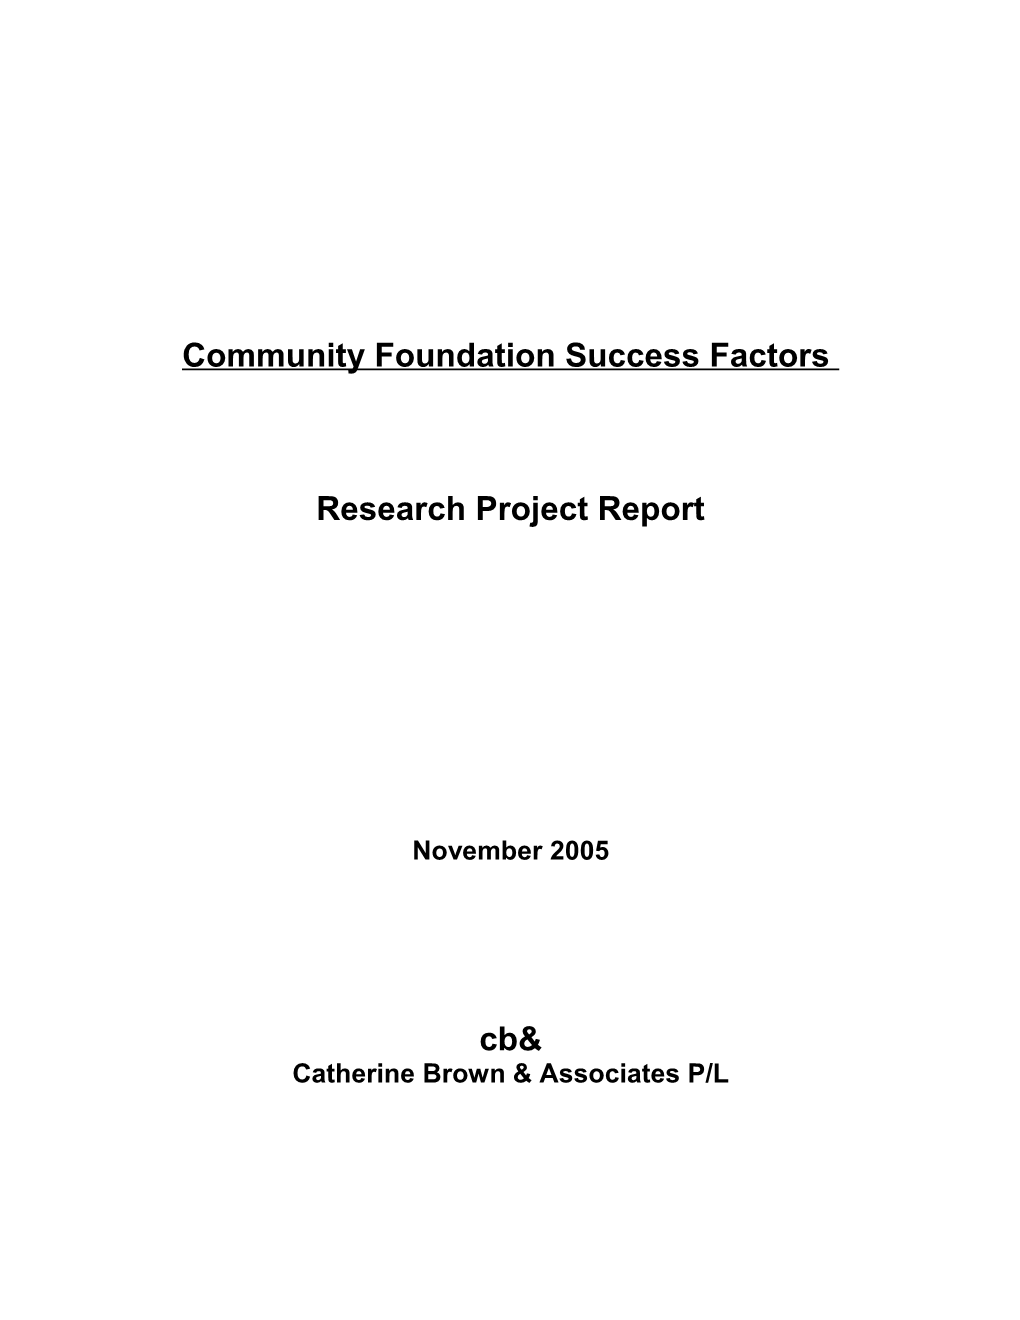 Community Foundation Success Factors Research Project